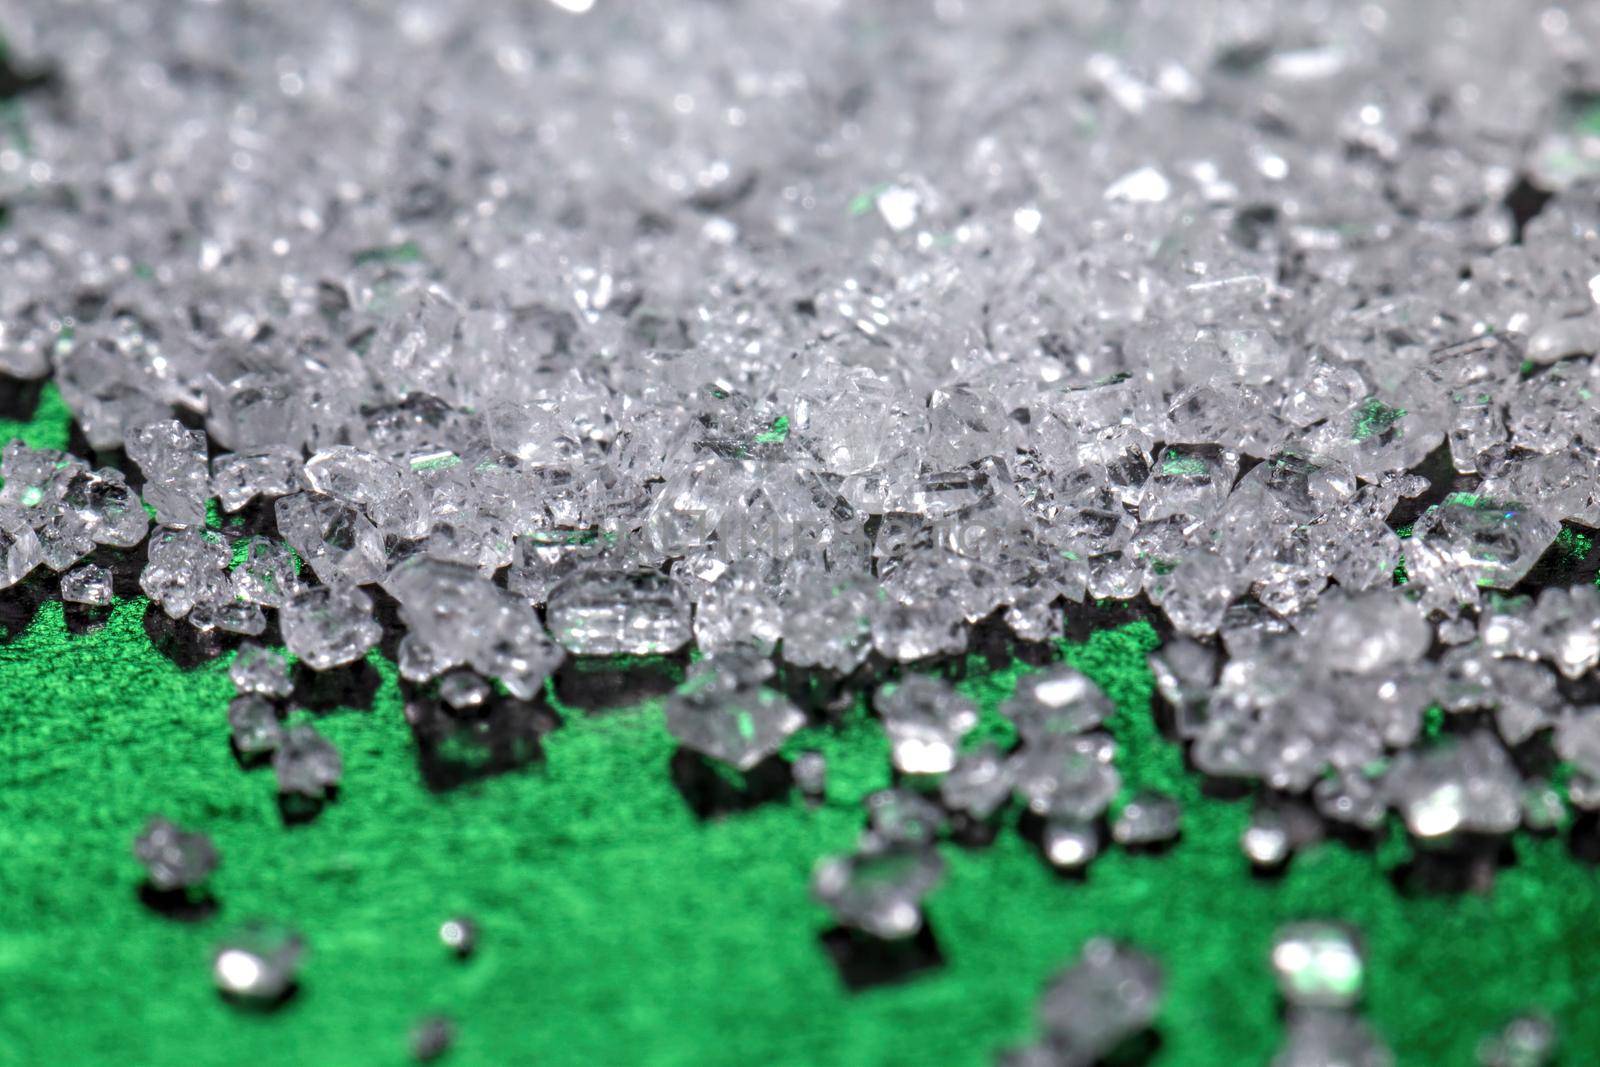 White sugar crystals on a dark green background by clusterx